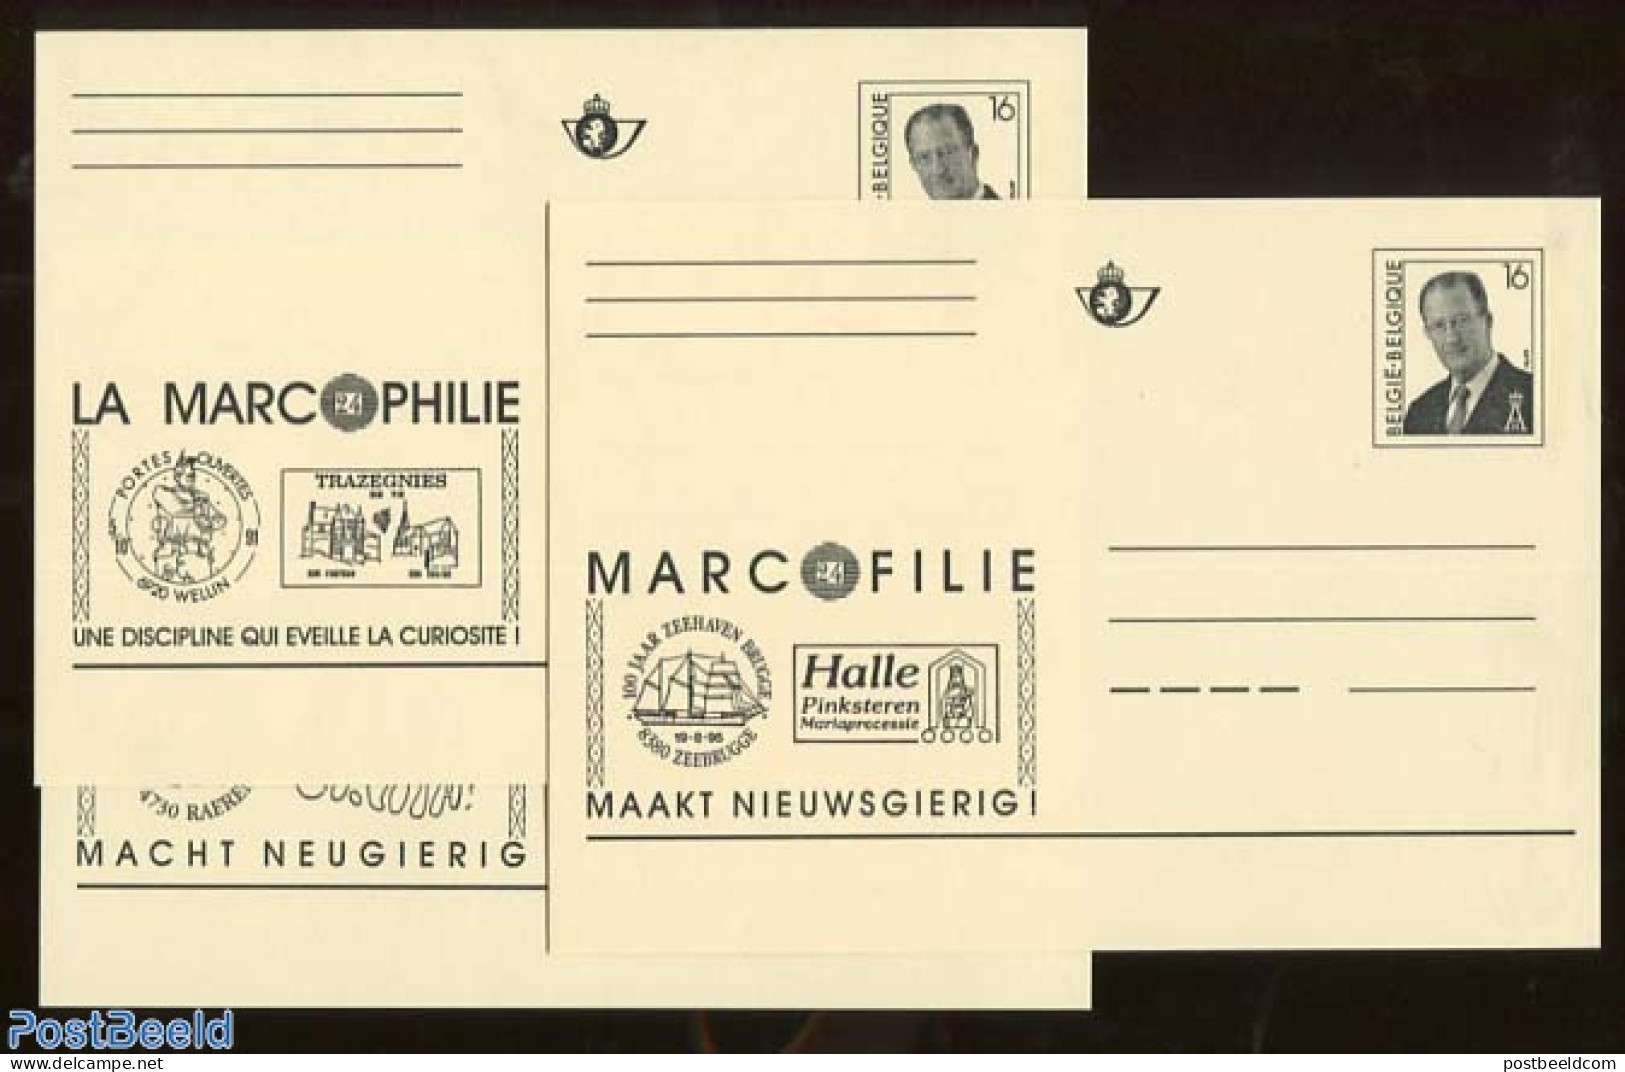 Belgium 1996 Postcard Set Markophilie (3 Cards), Unused Postal Stationary - Covers & Documents